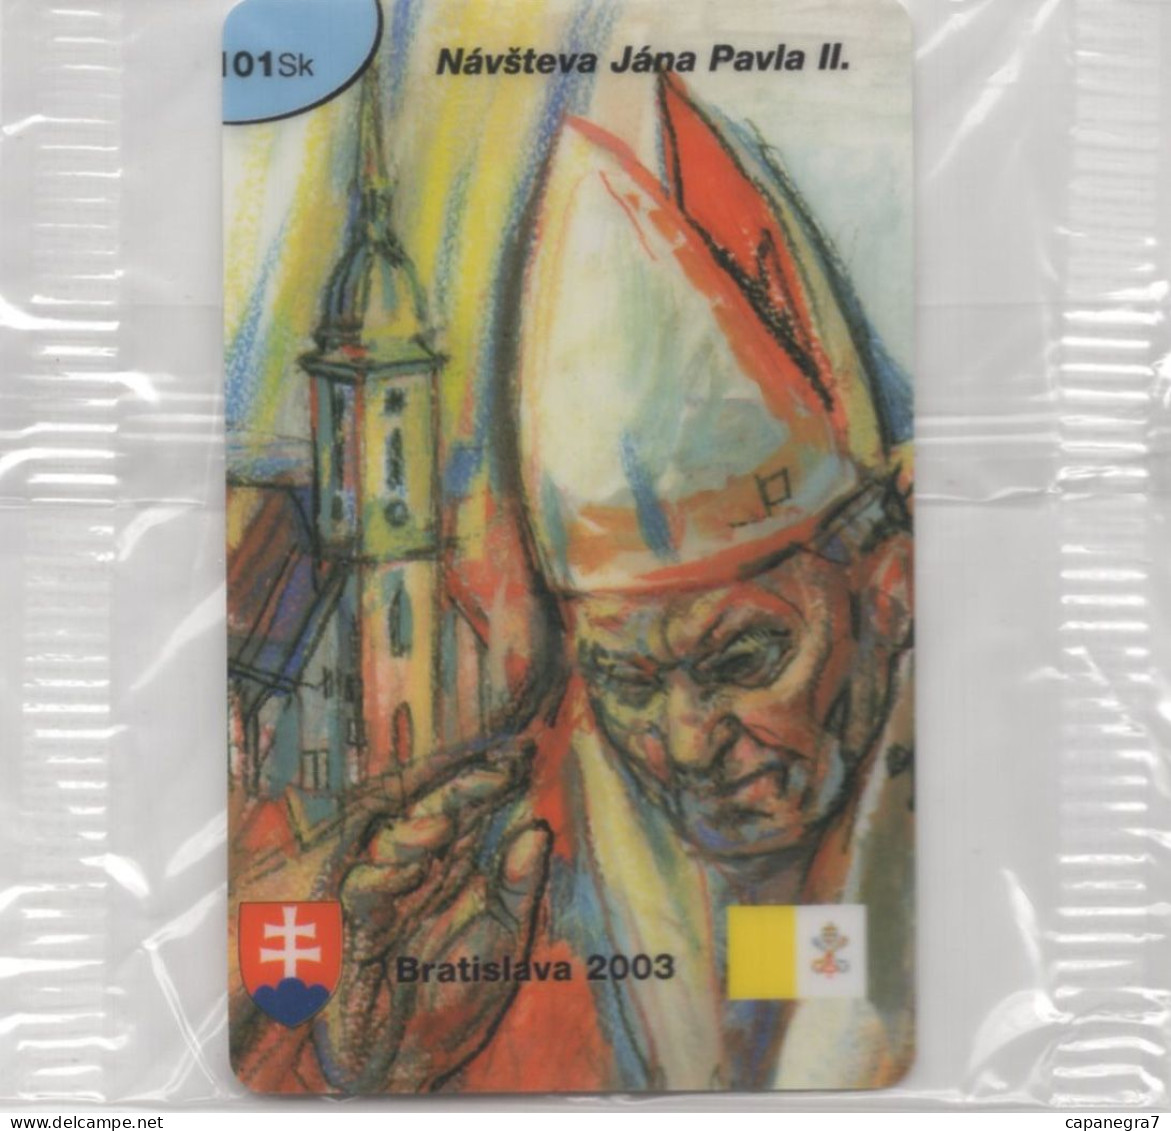 Ope John Paulu II. - Bratislava 2003, Remote Memory, Prepaid Calling Card, 101 Sk., 1.250 Pc., GlobalIPhone, Slovakia, M - Slovaquie